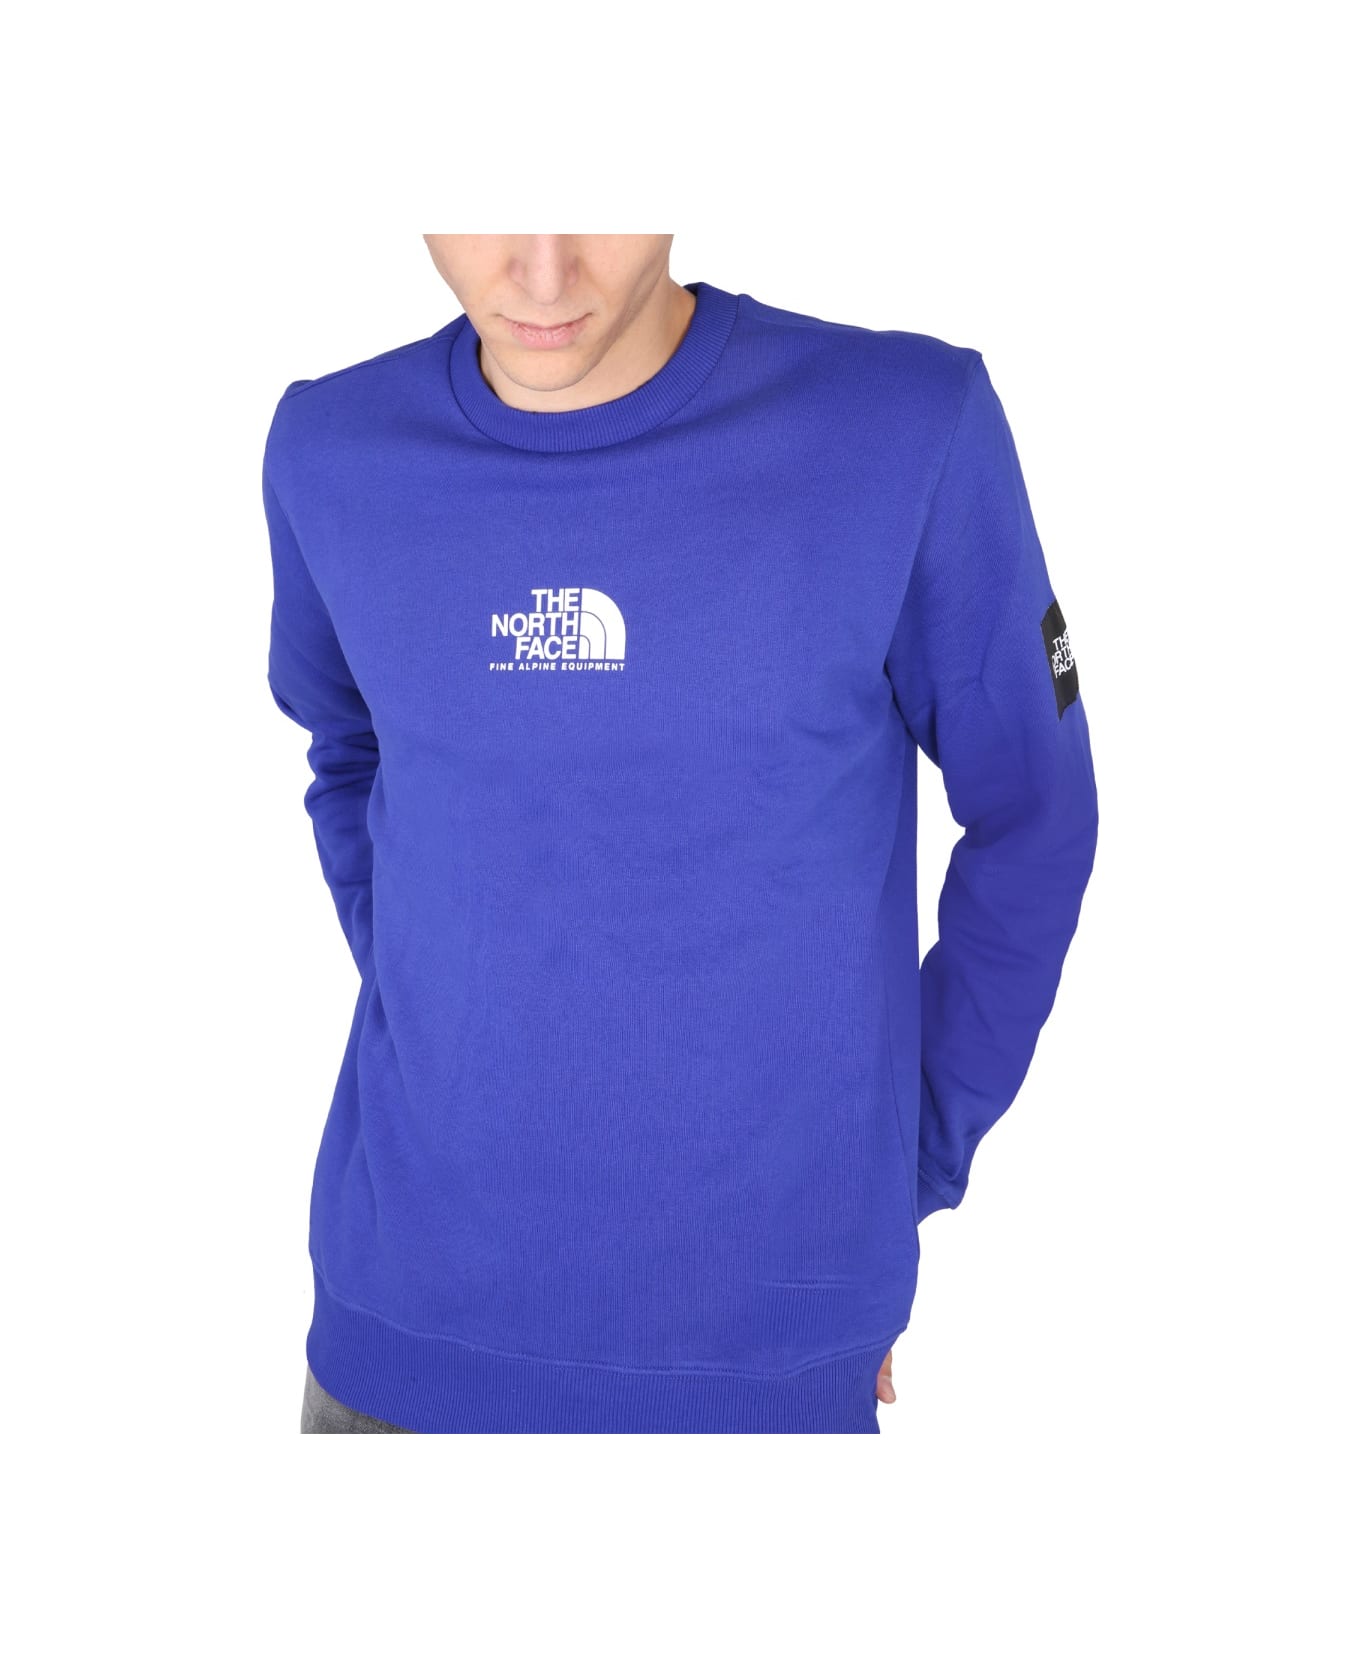 The North Face Crewneck Sweatshirt - BLUE フリース